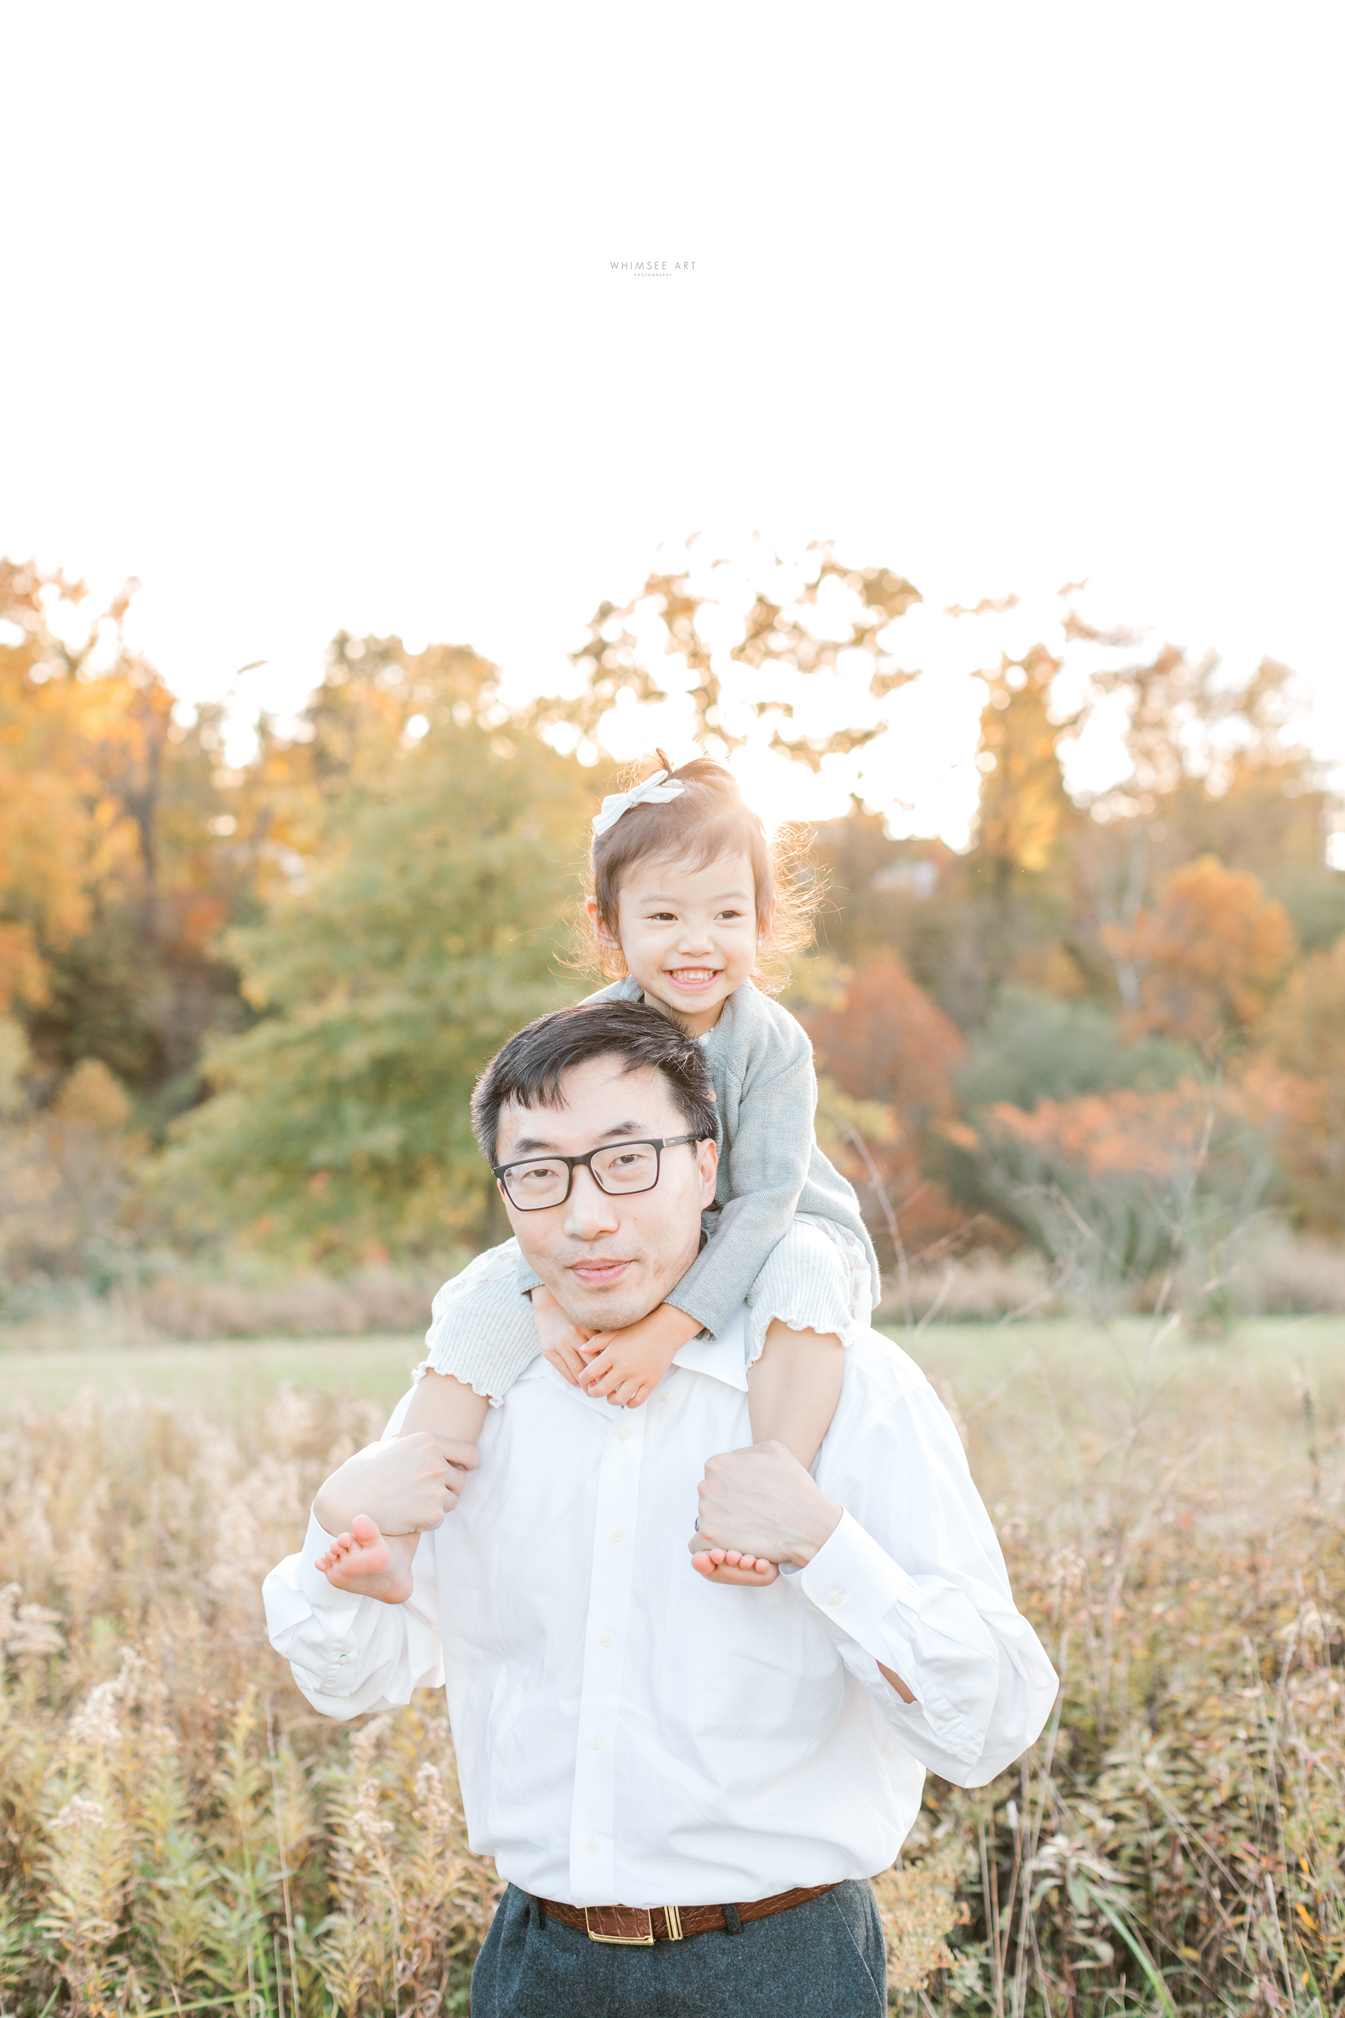 The Wang Family | Whimsee Art Photography | Roanoke Photographers